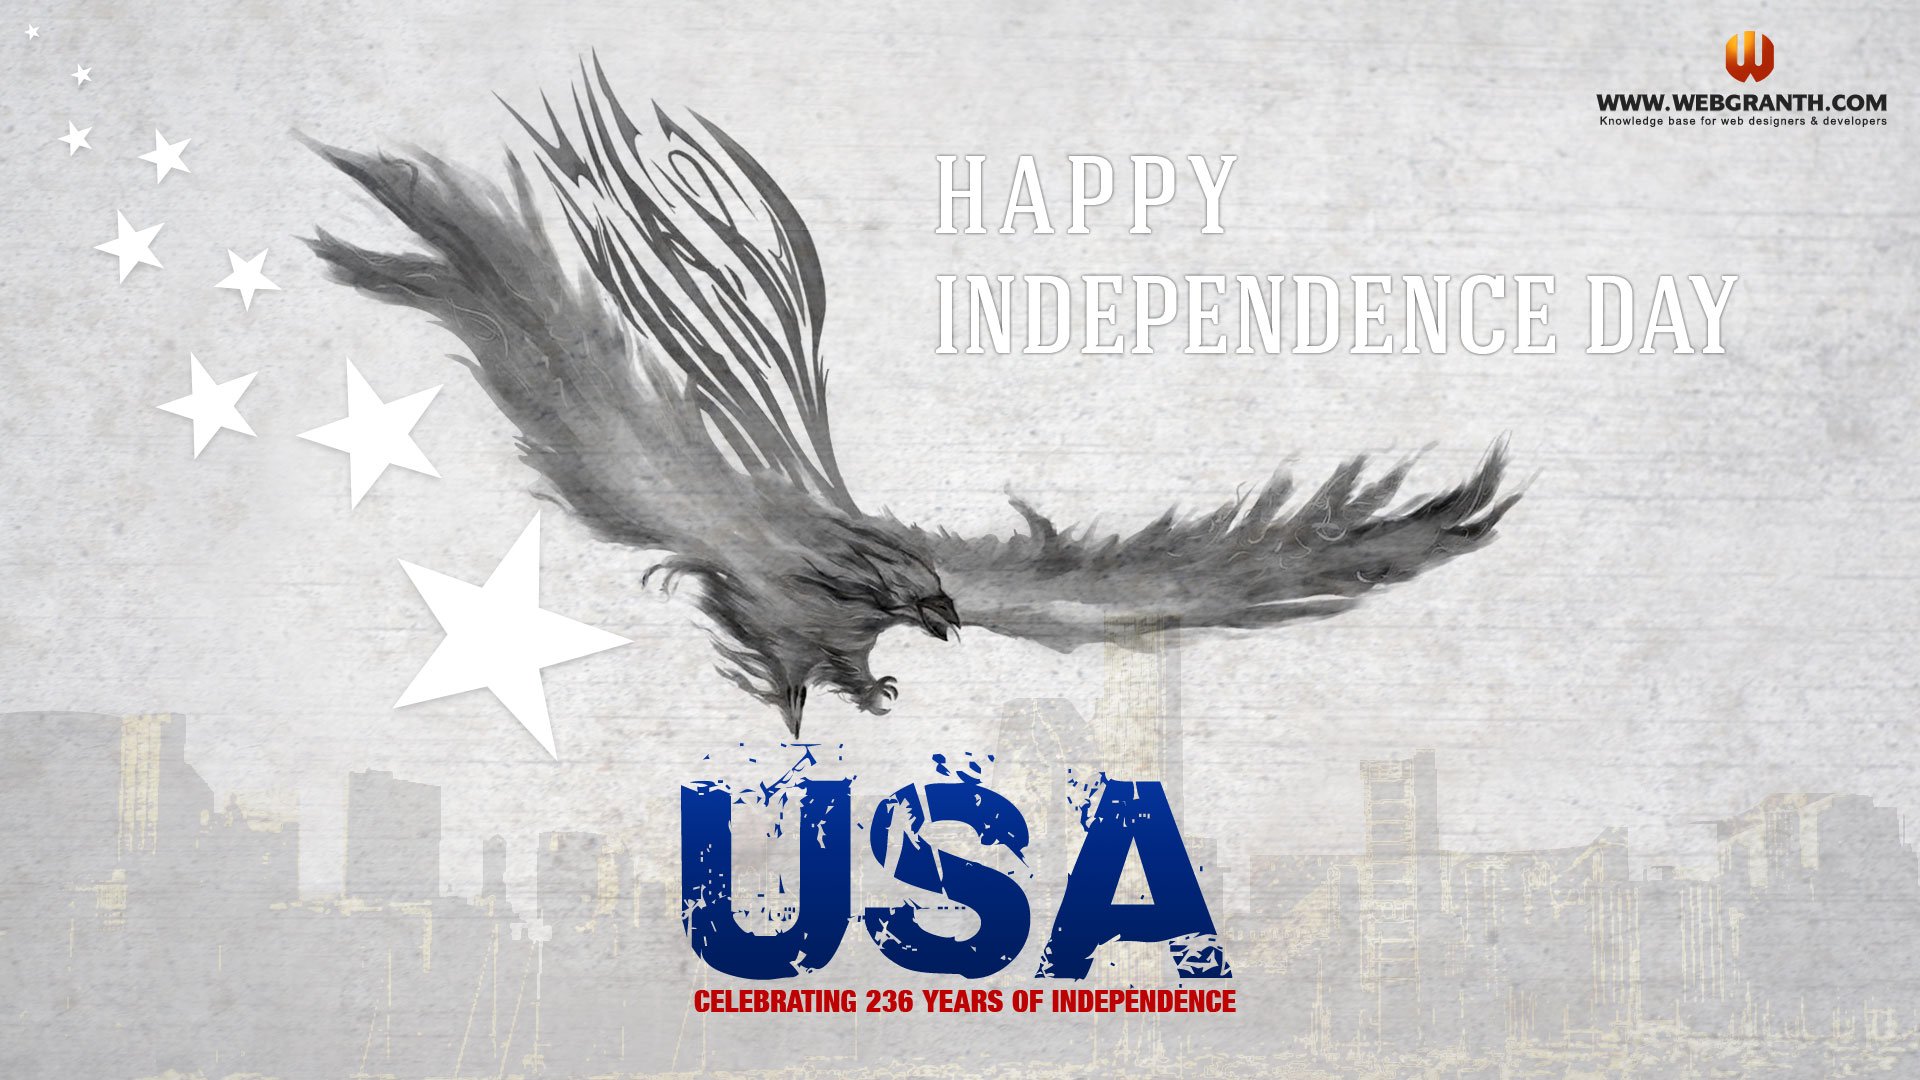 American independence day wallpaper desktop free download